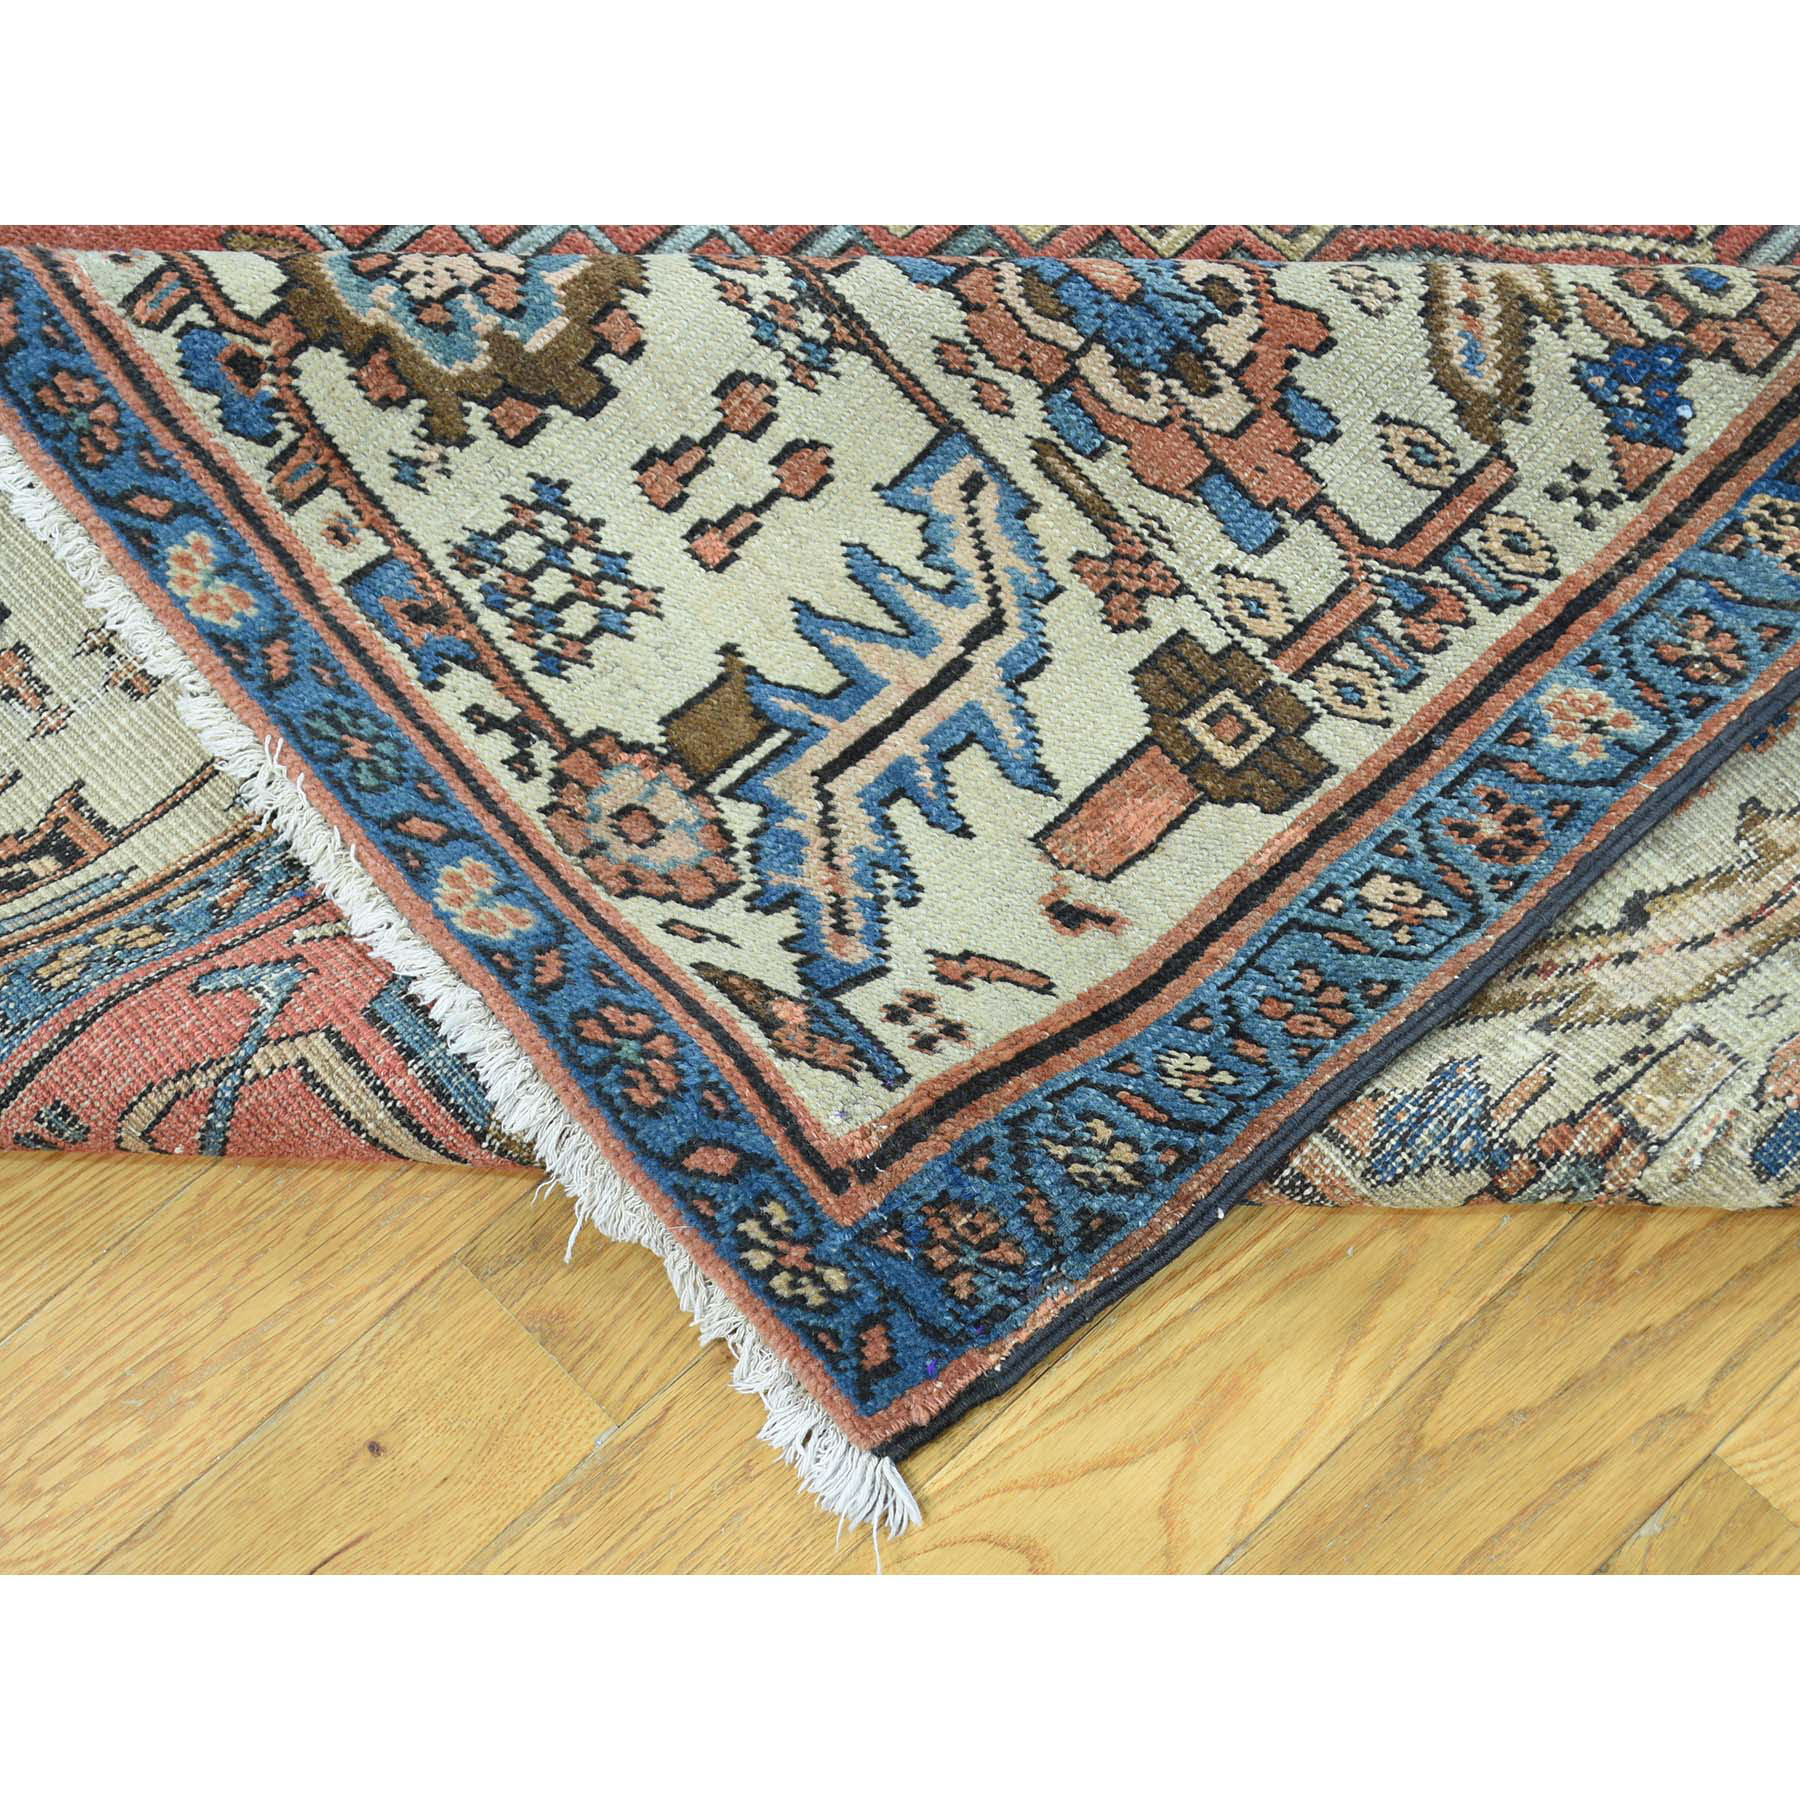 8-4 x14- Original Antique Persian Bakshaish Good Cond Gallery Size Rug 